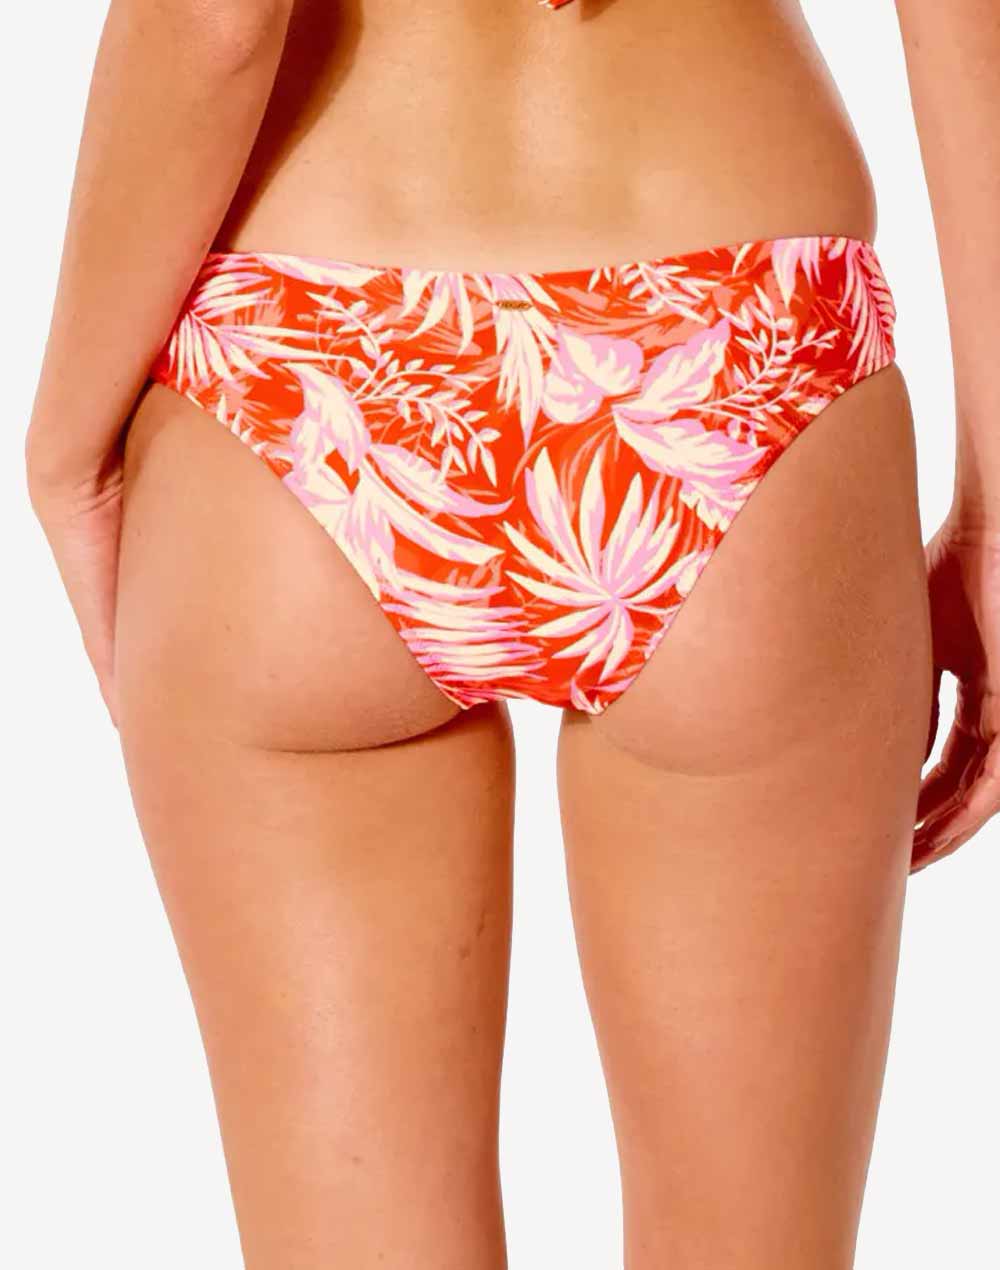 Sunrays Cheeky Bikini Bottom#color_sunrays-orange